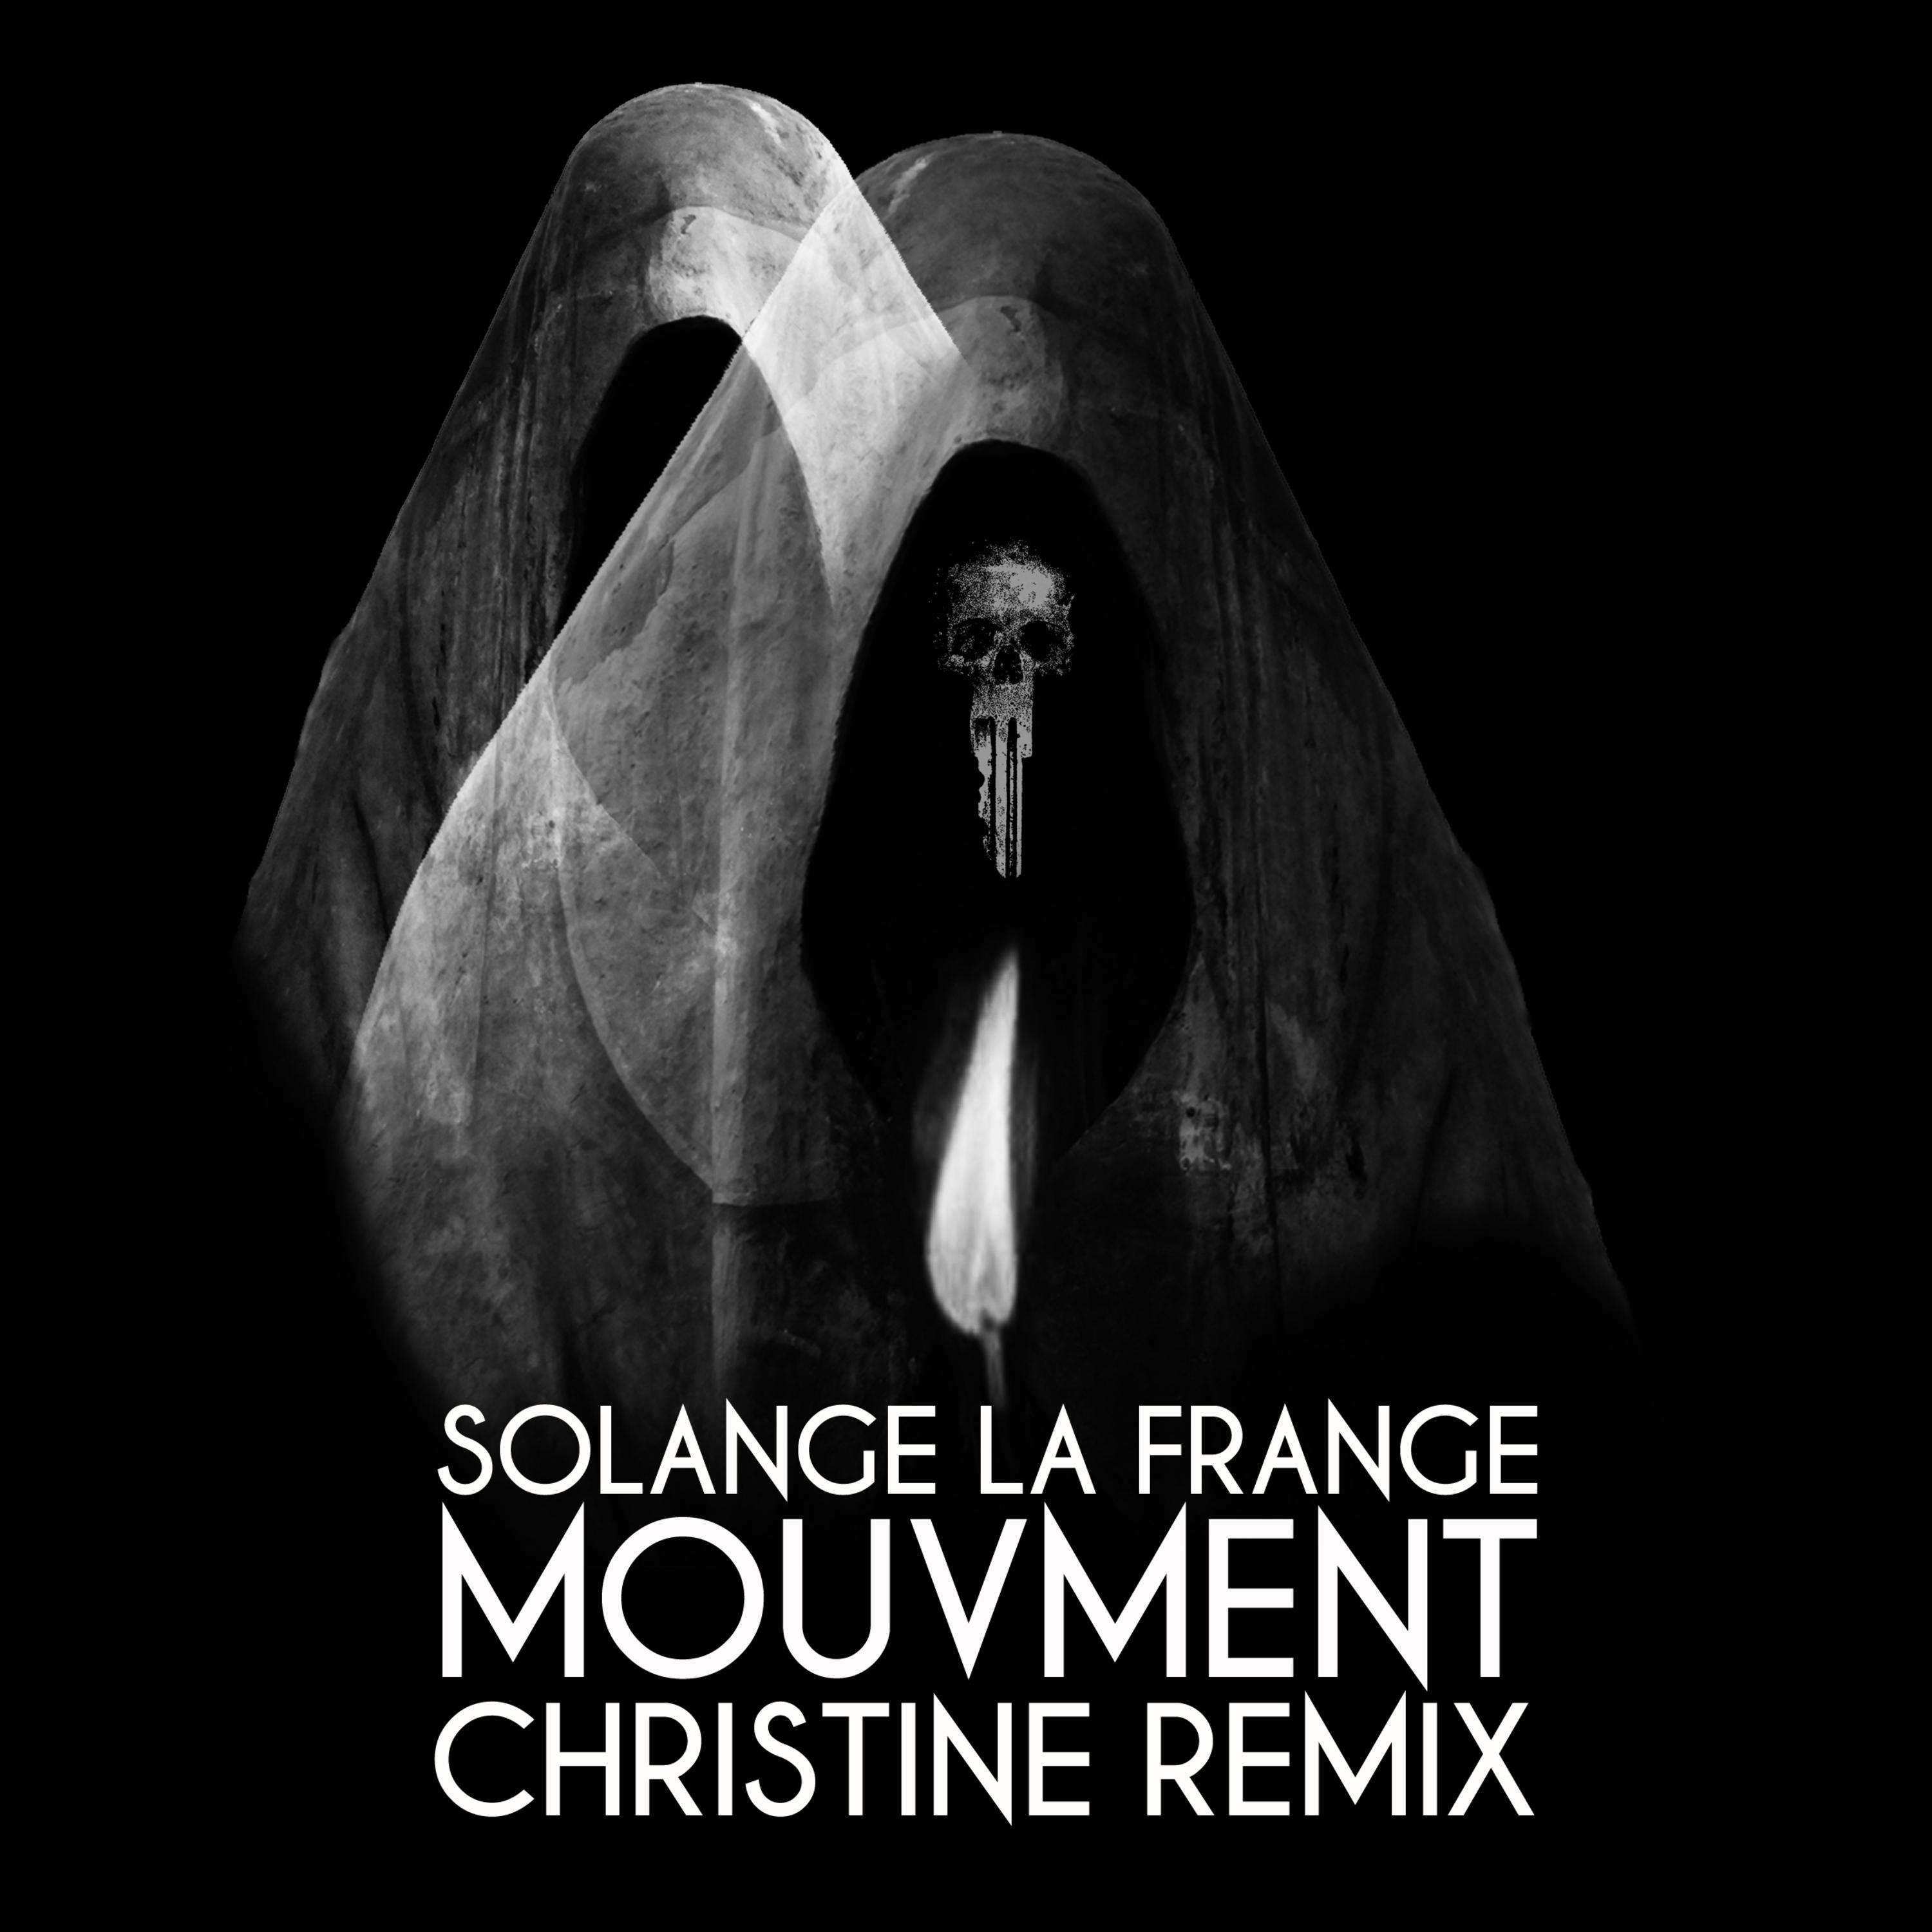 Mouvment (Christine Remix)